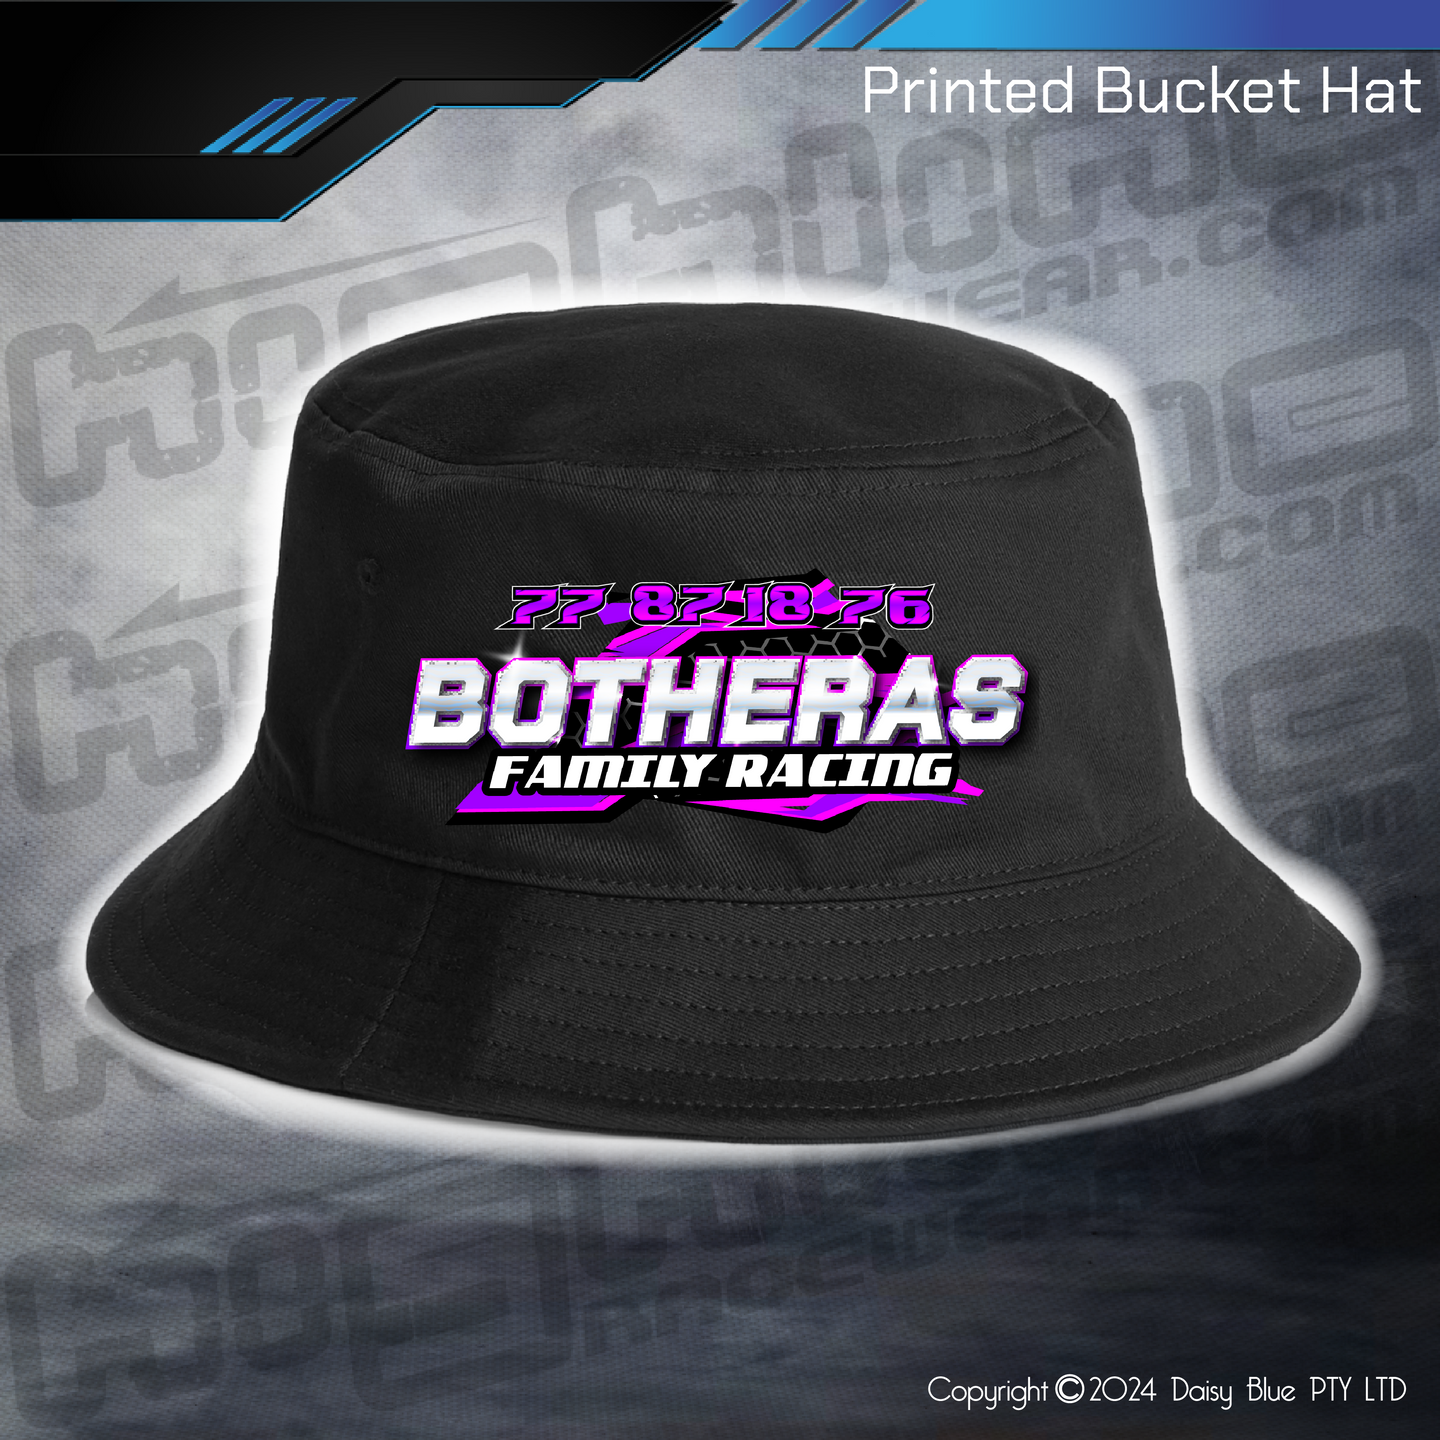 Printed Bucket Hat - Botheras Family Racing